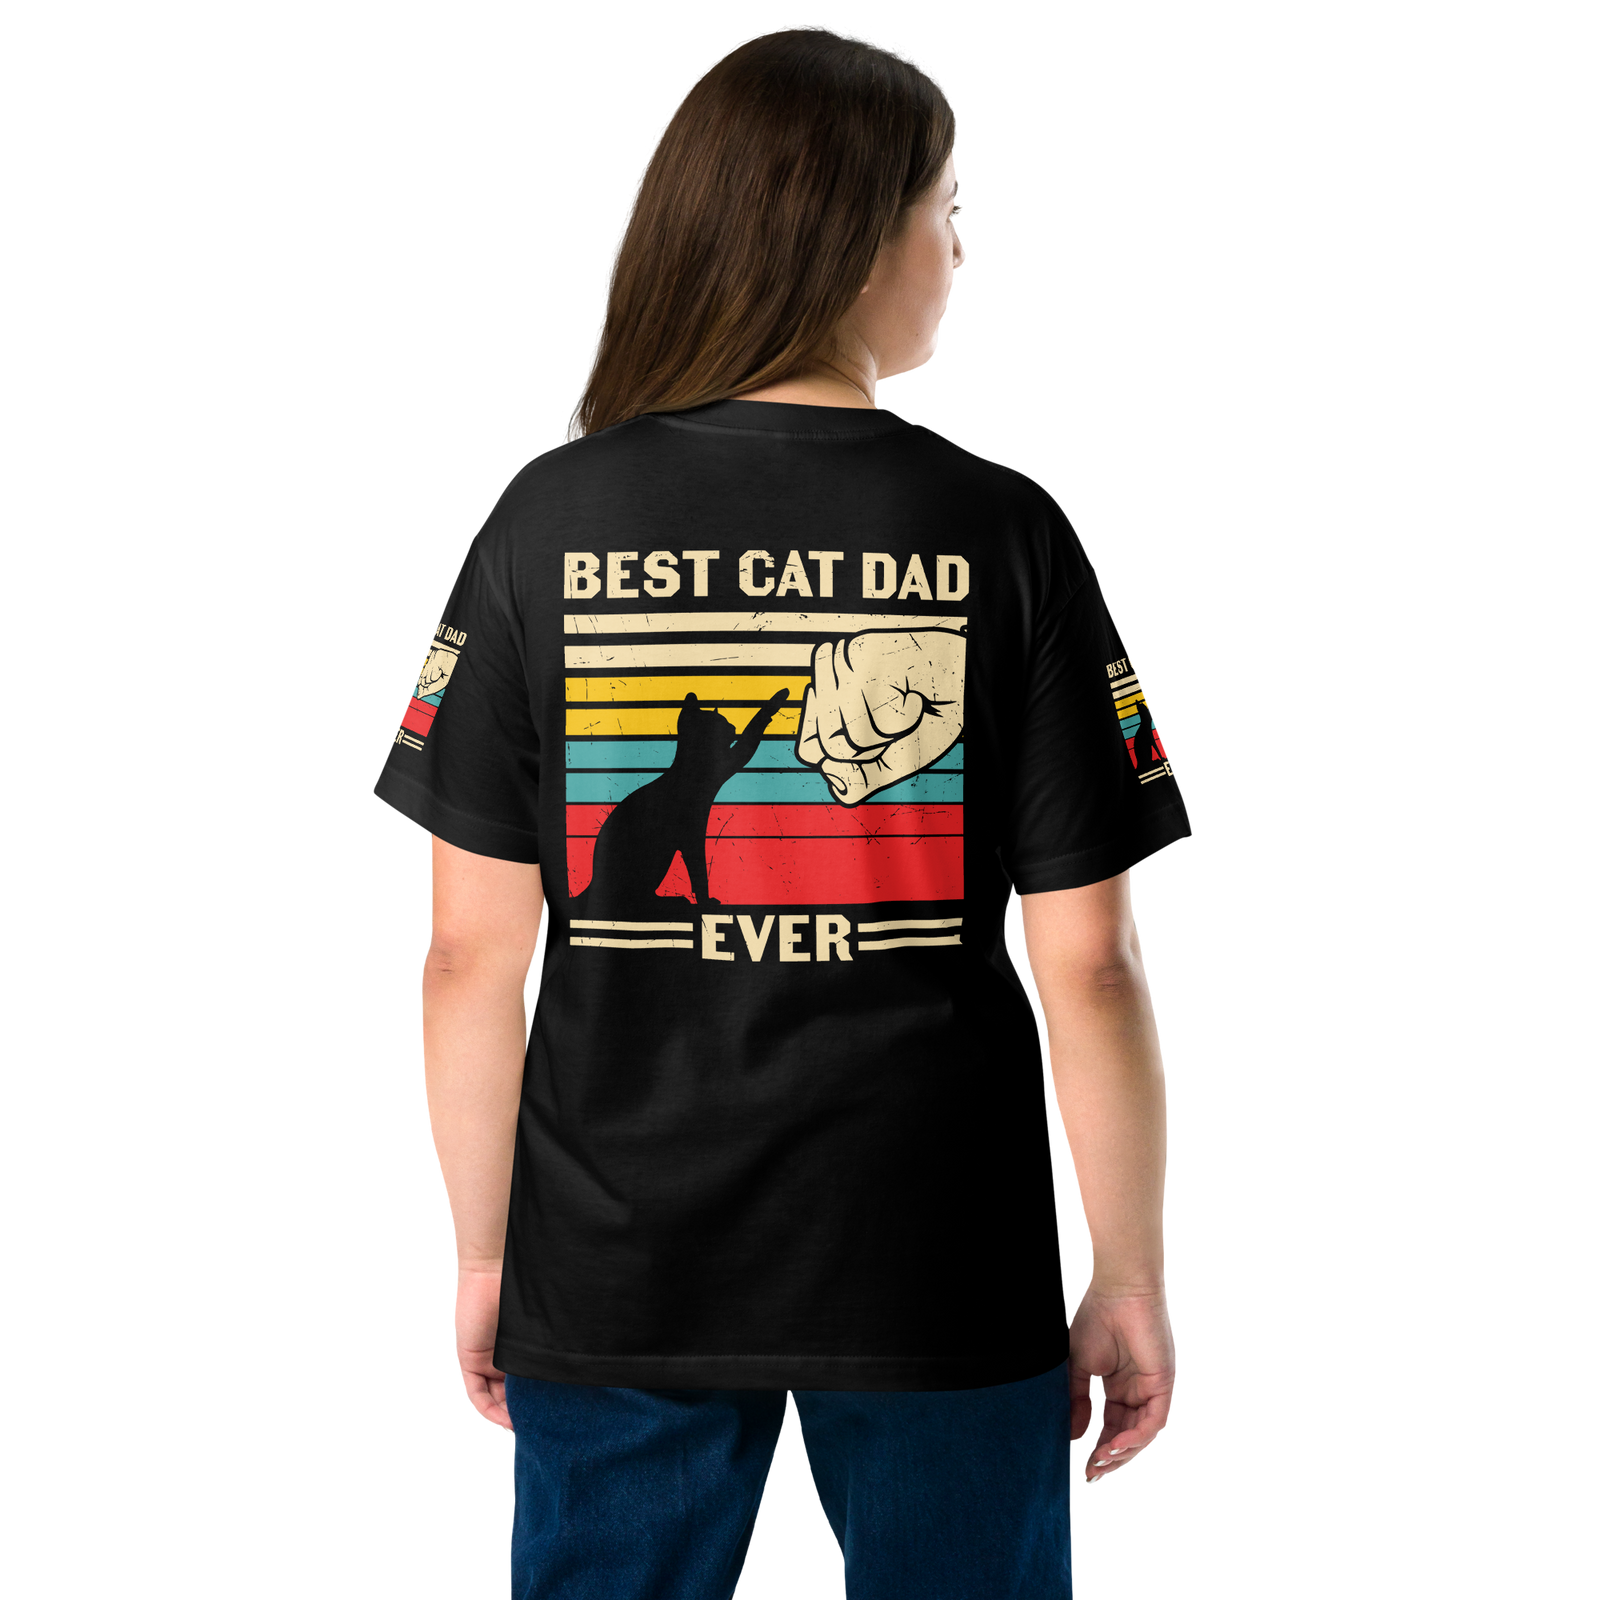 Best Cat Dad Ever - Cotton T-shirt